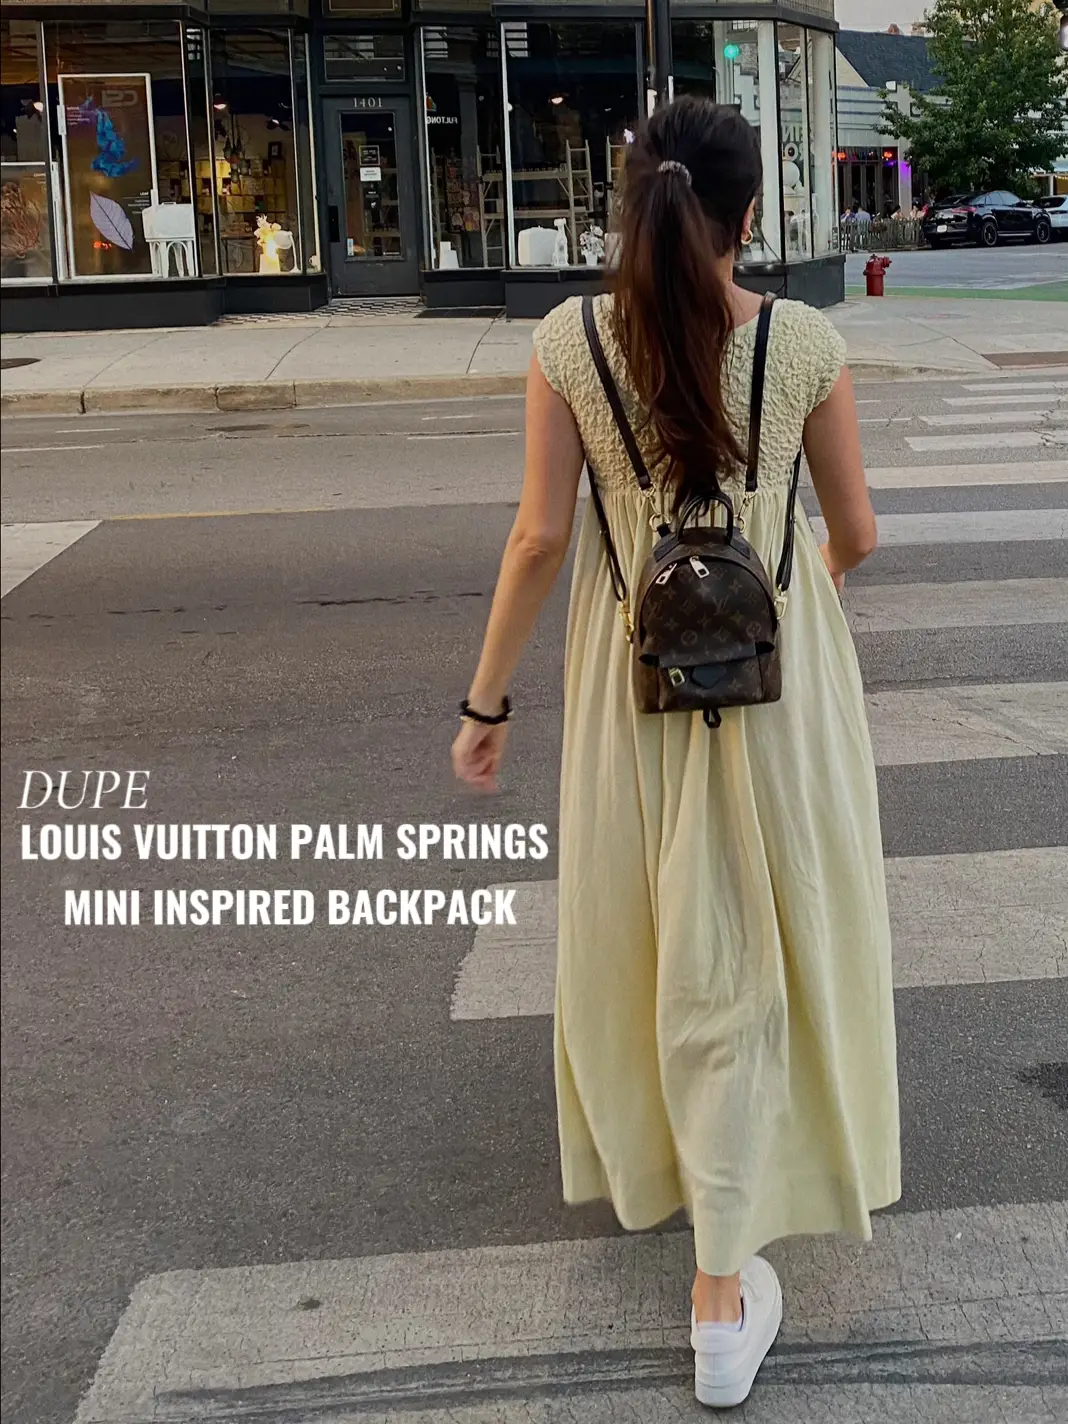 Louis Vuitton Palm Springs Mini Backpack  Louis vuitton palm springs mini,  Outfit inspo, Clothes